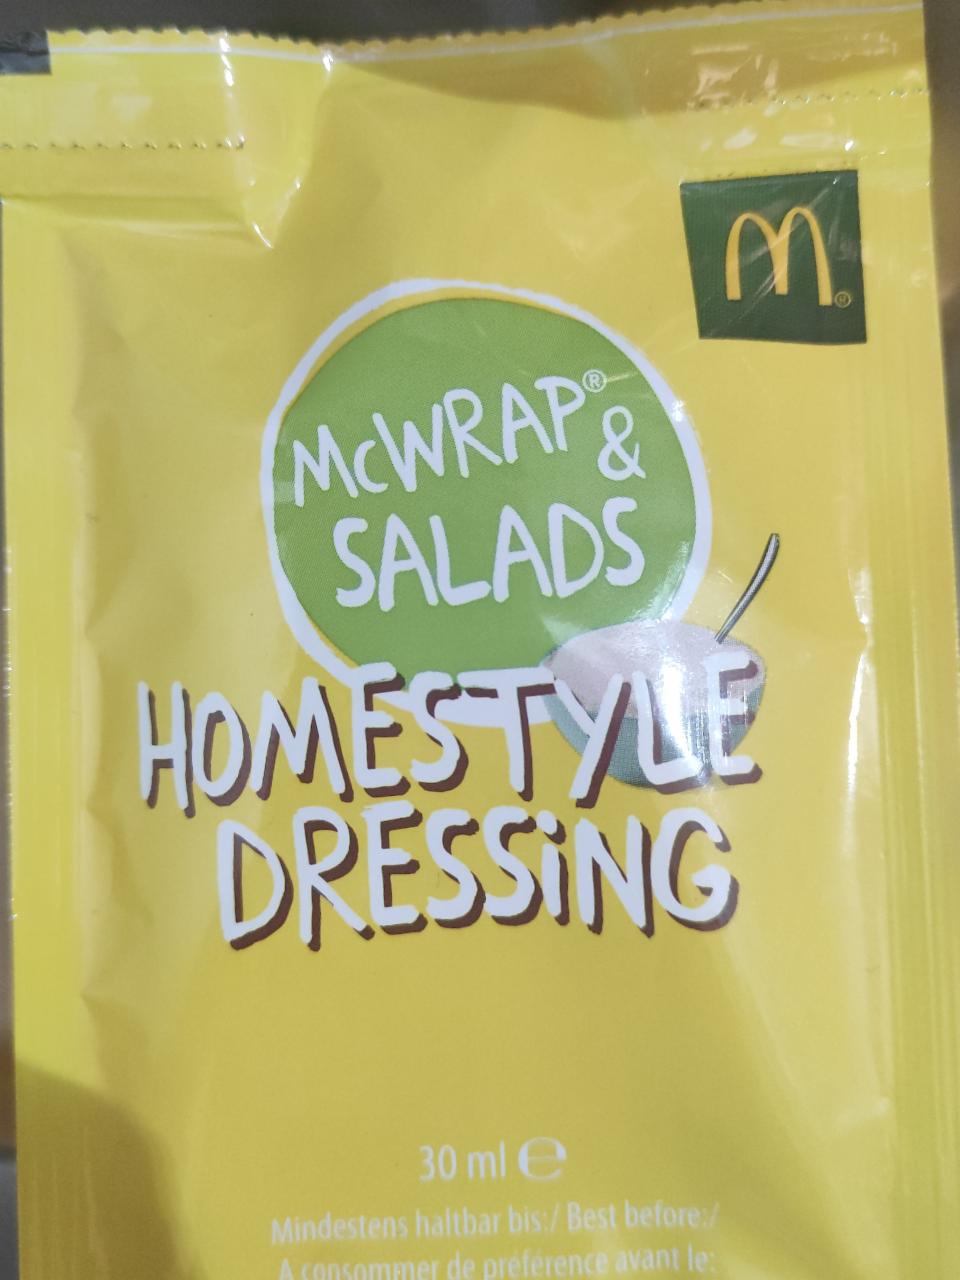 Fotografie - Homestyle Dressing McWrap & Salads